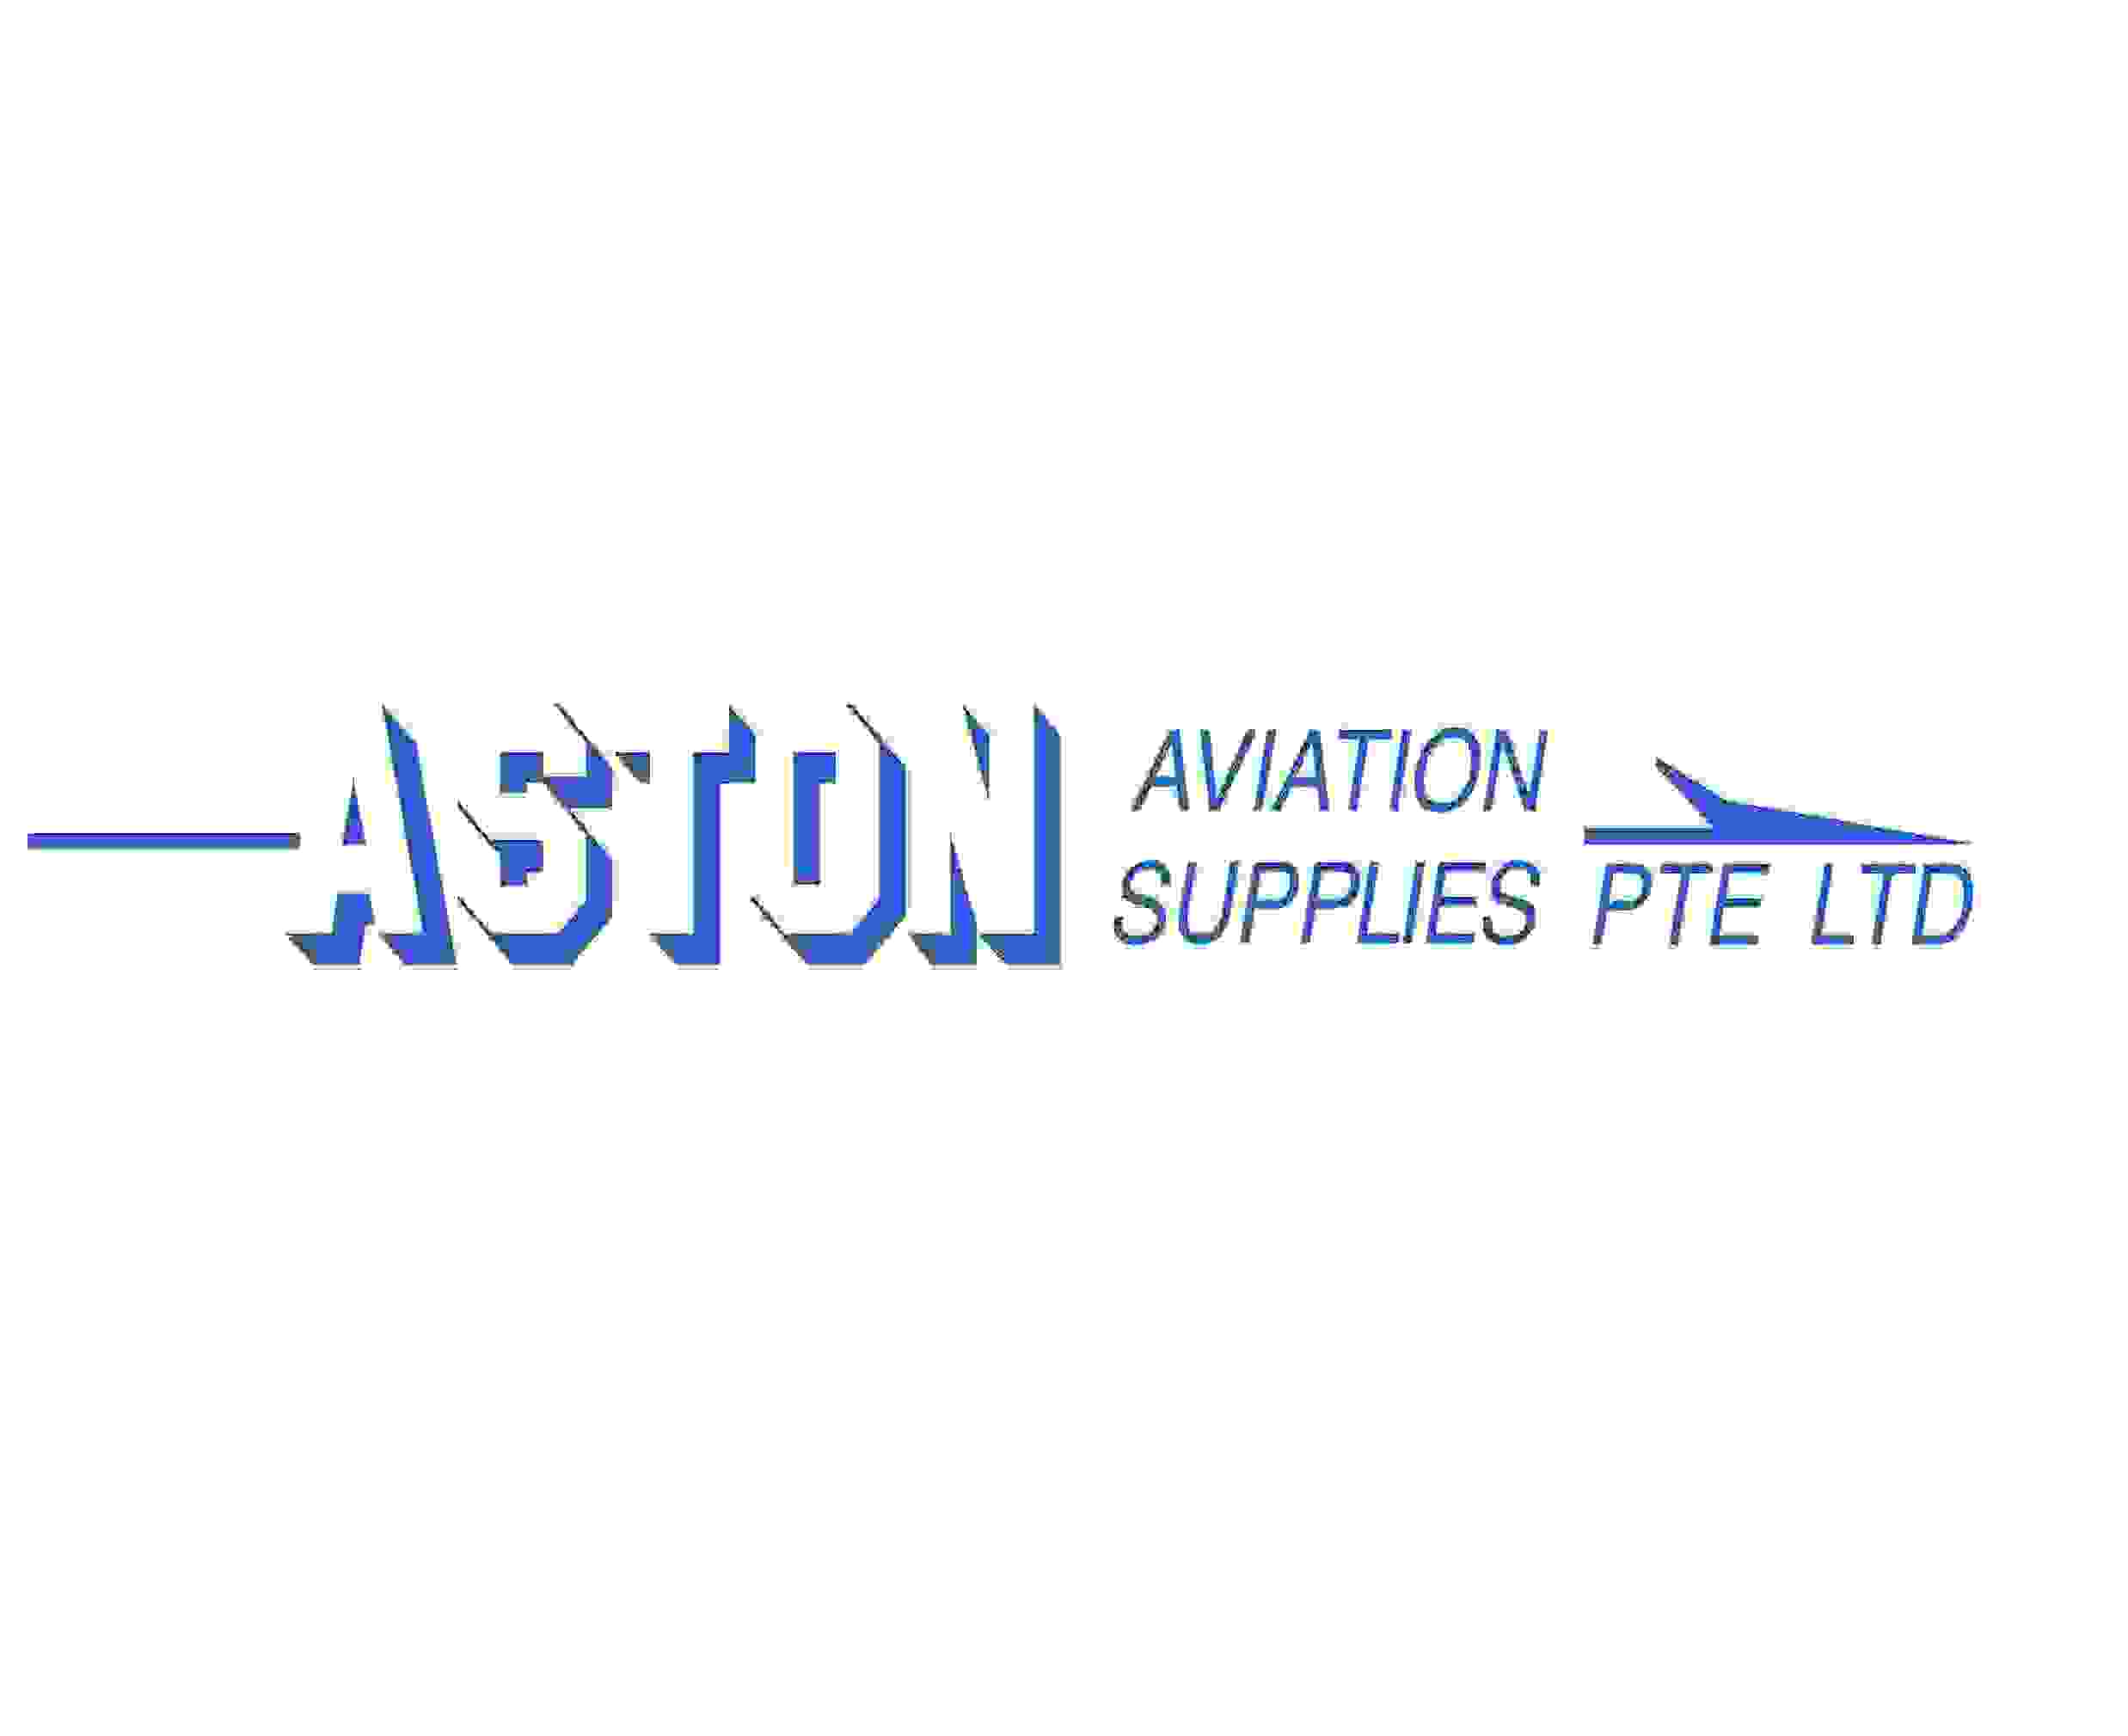 Aston Aviation Supplies Pte Ltd logo